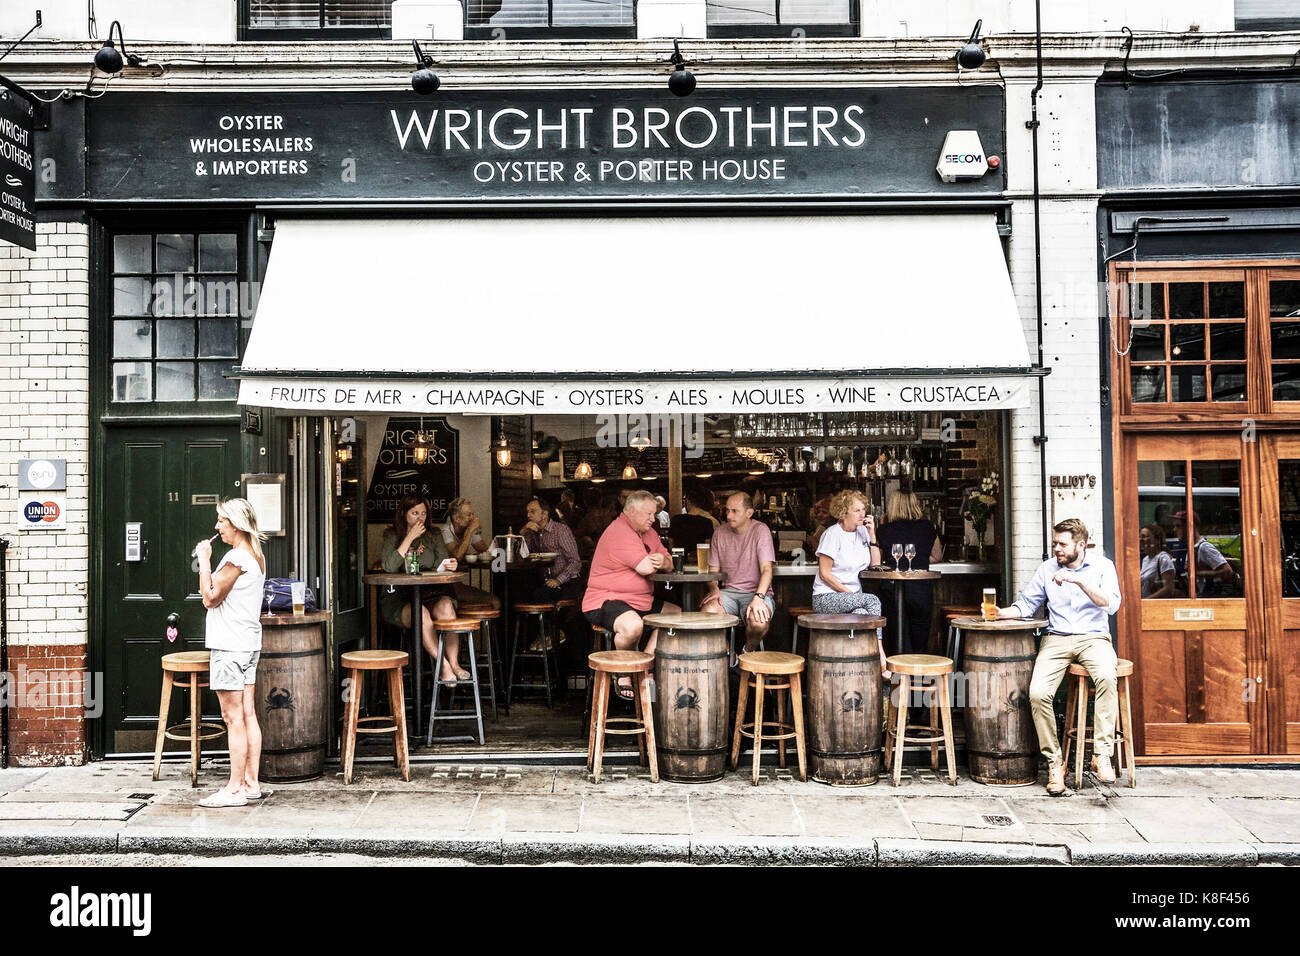 Wright Brothers Oyster and Porter House, Borough Market, Londra, Regno Unito. Foto Stock